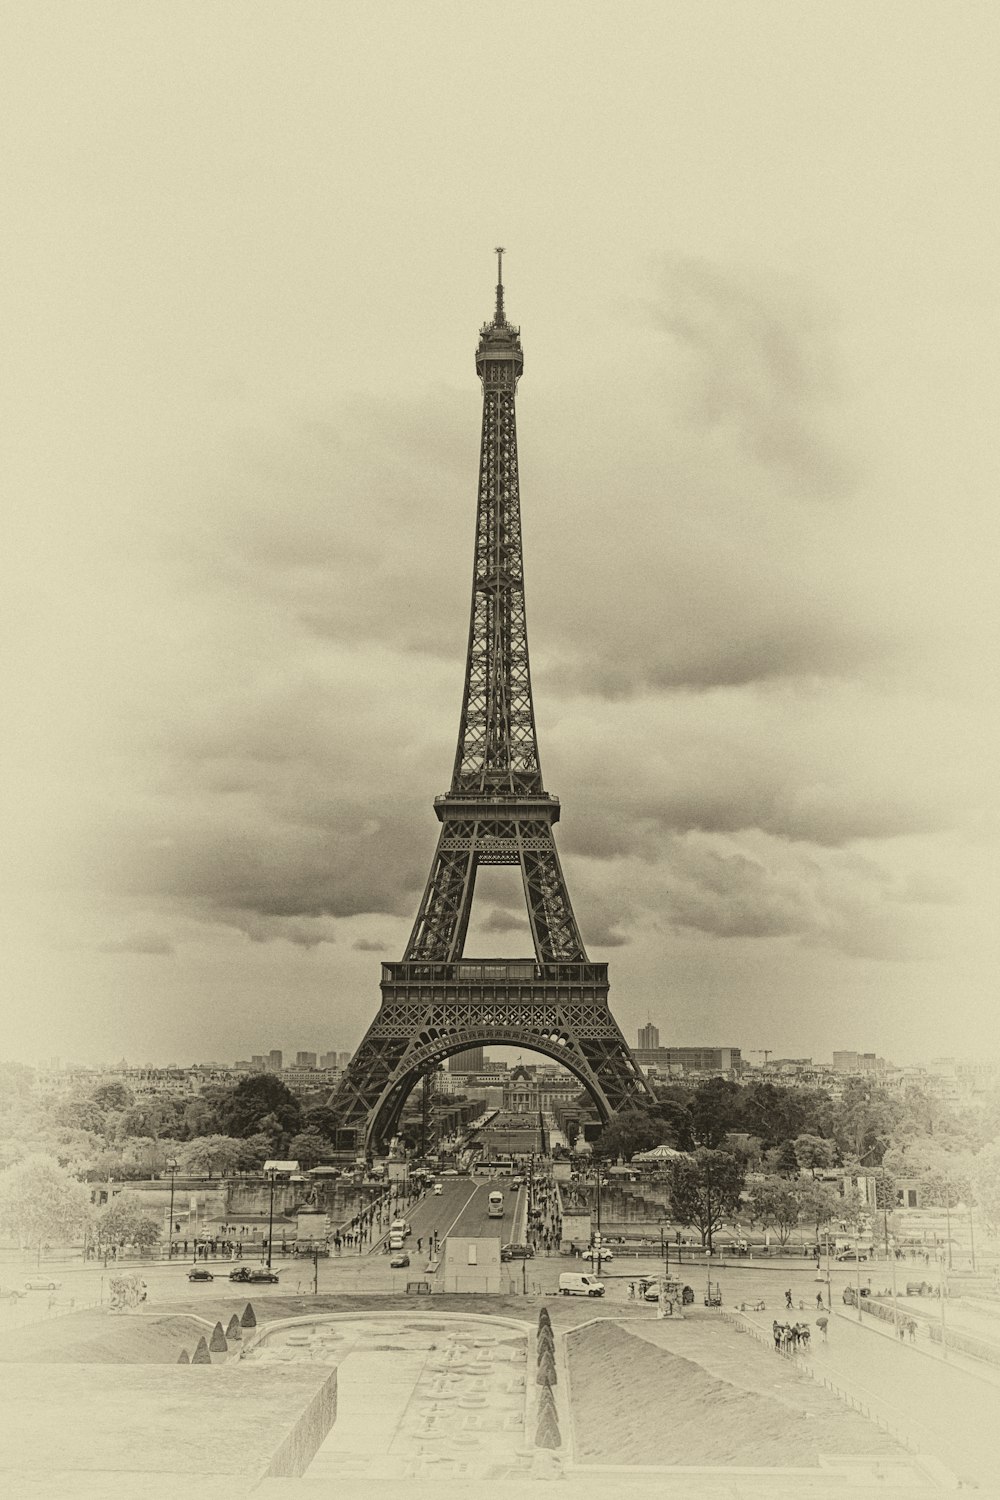 strada trafficata che mostra la Torre Eiffel, Parigi Francia